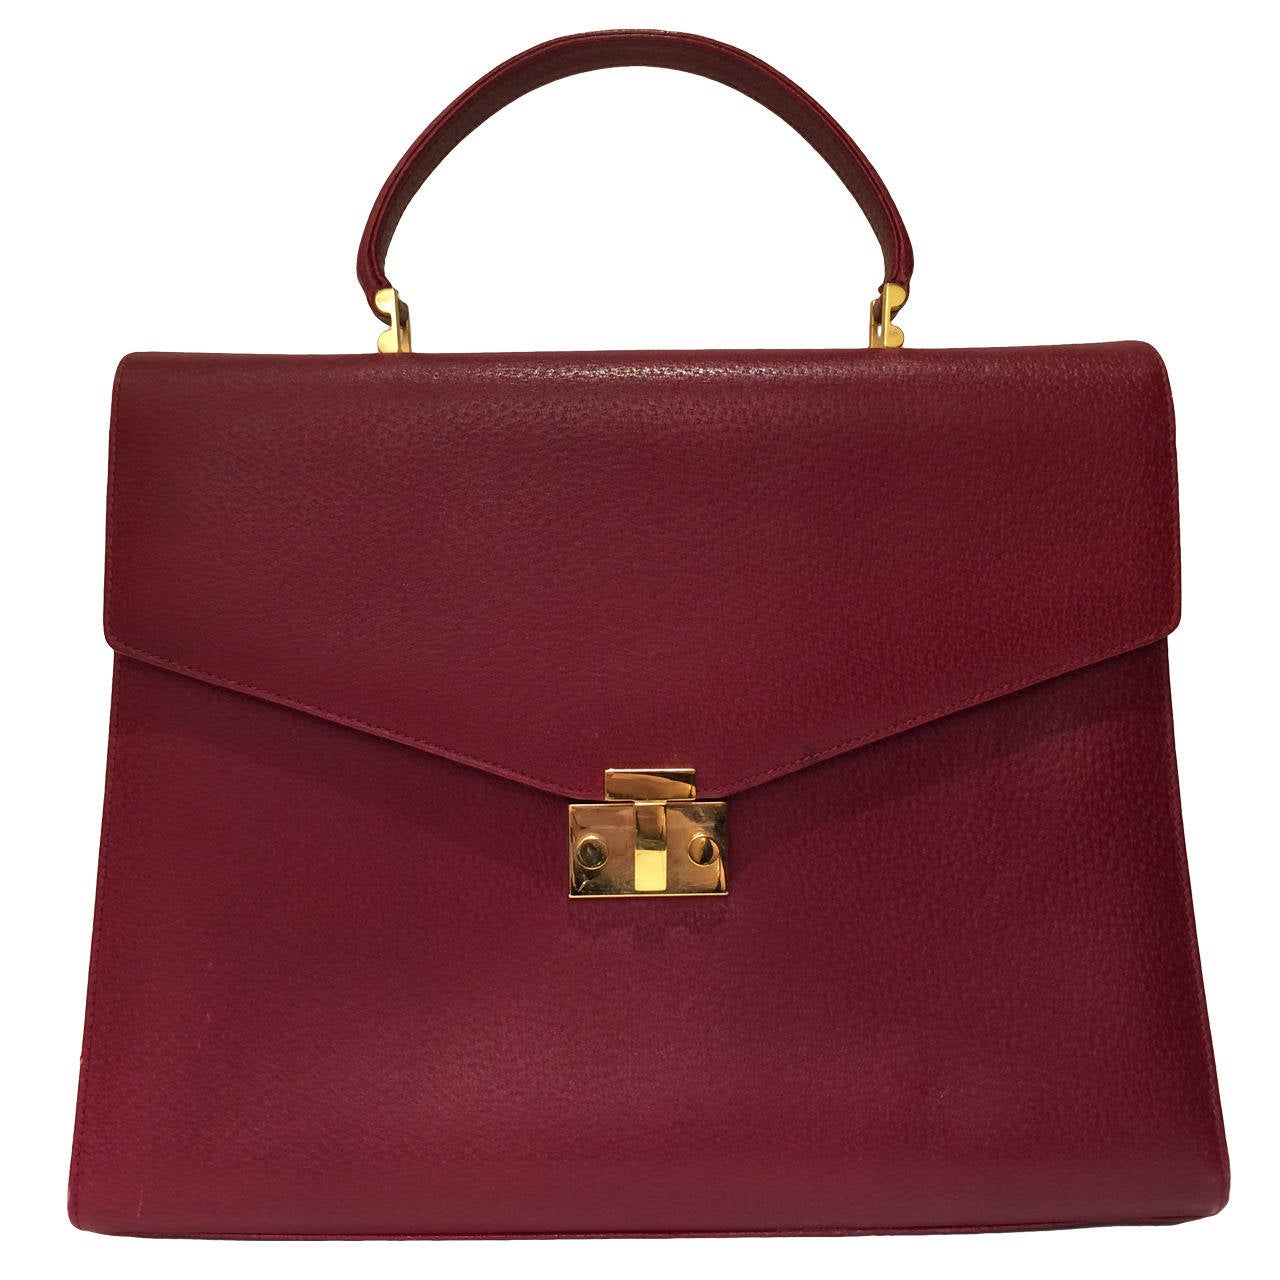 Tiffany & Co. Burgundy Leather Handbag